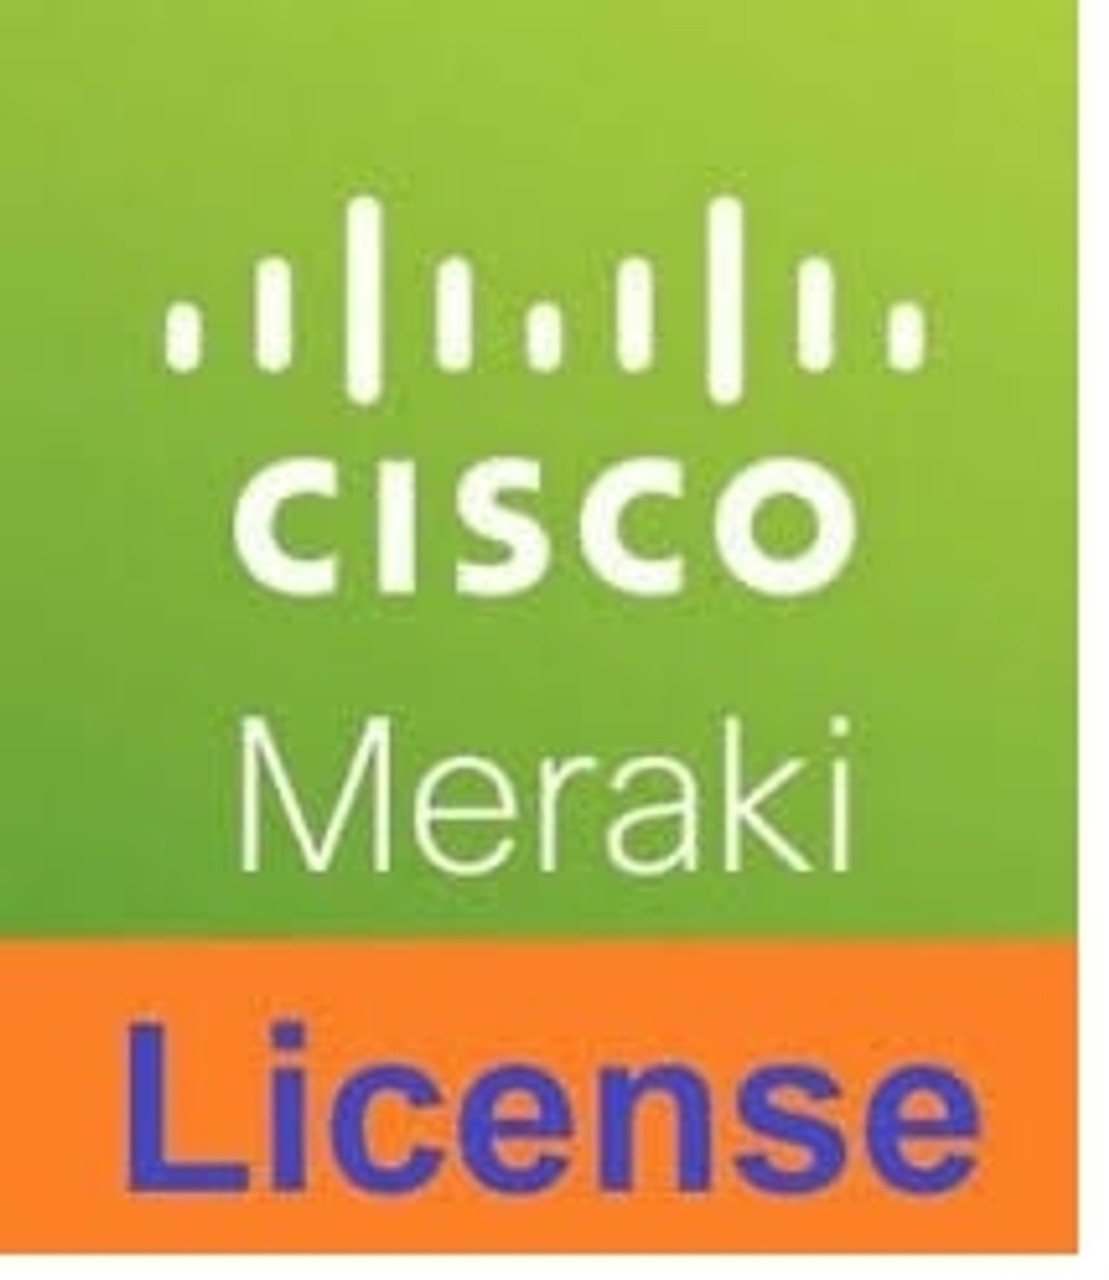 EOS Meraki MS320-48 Enterprise License and Support-1 Day